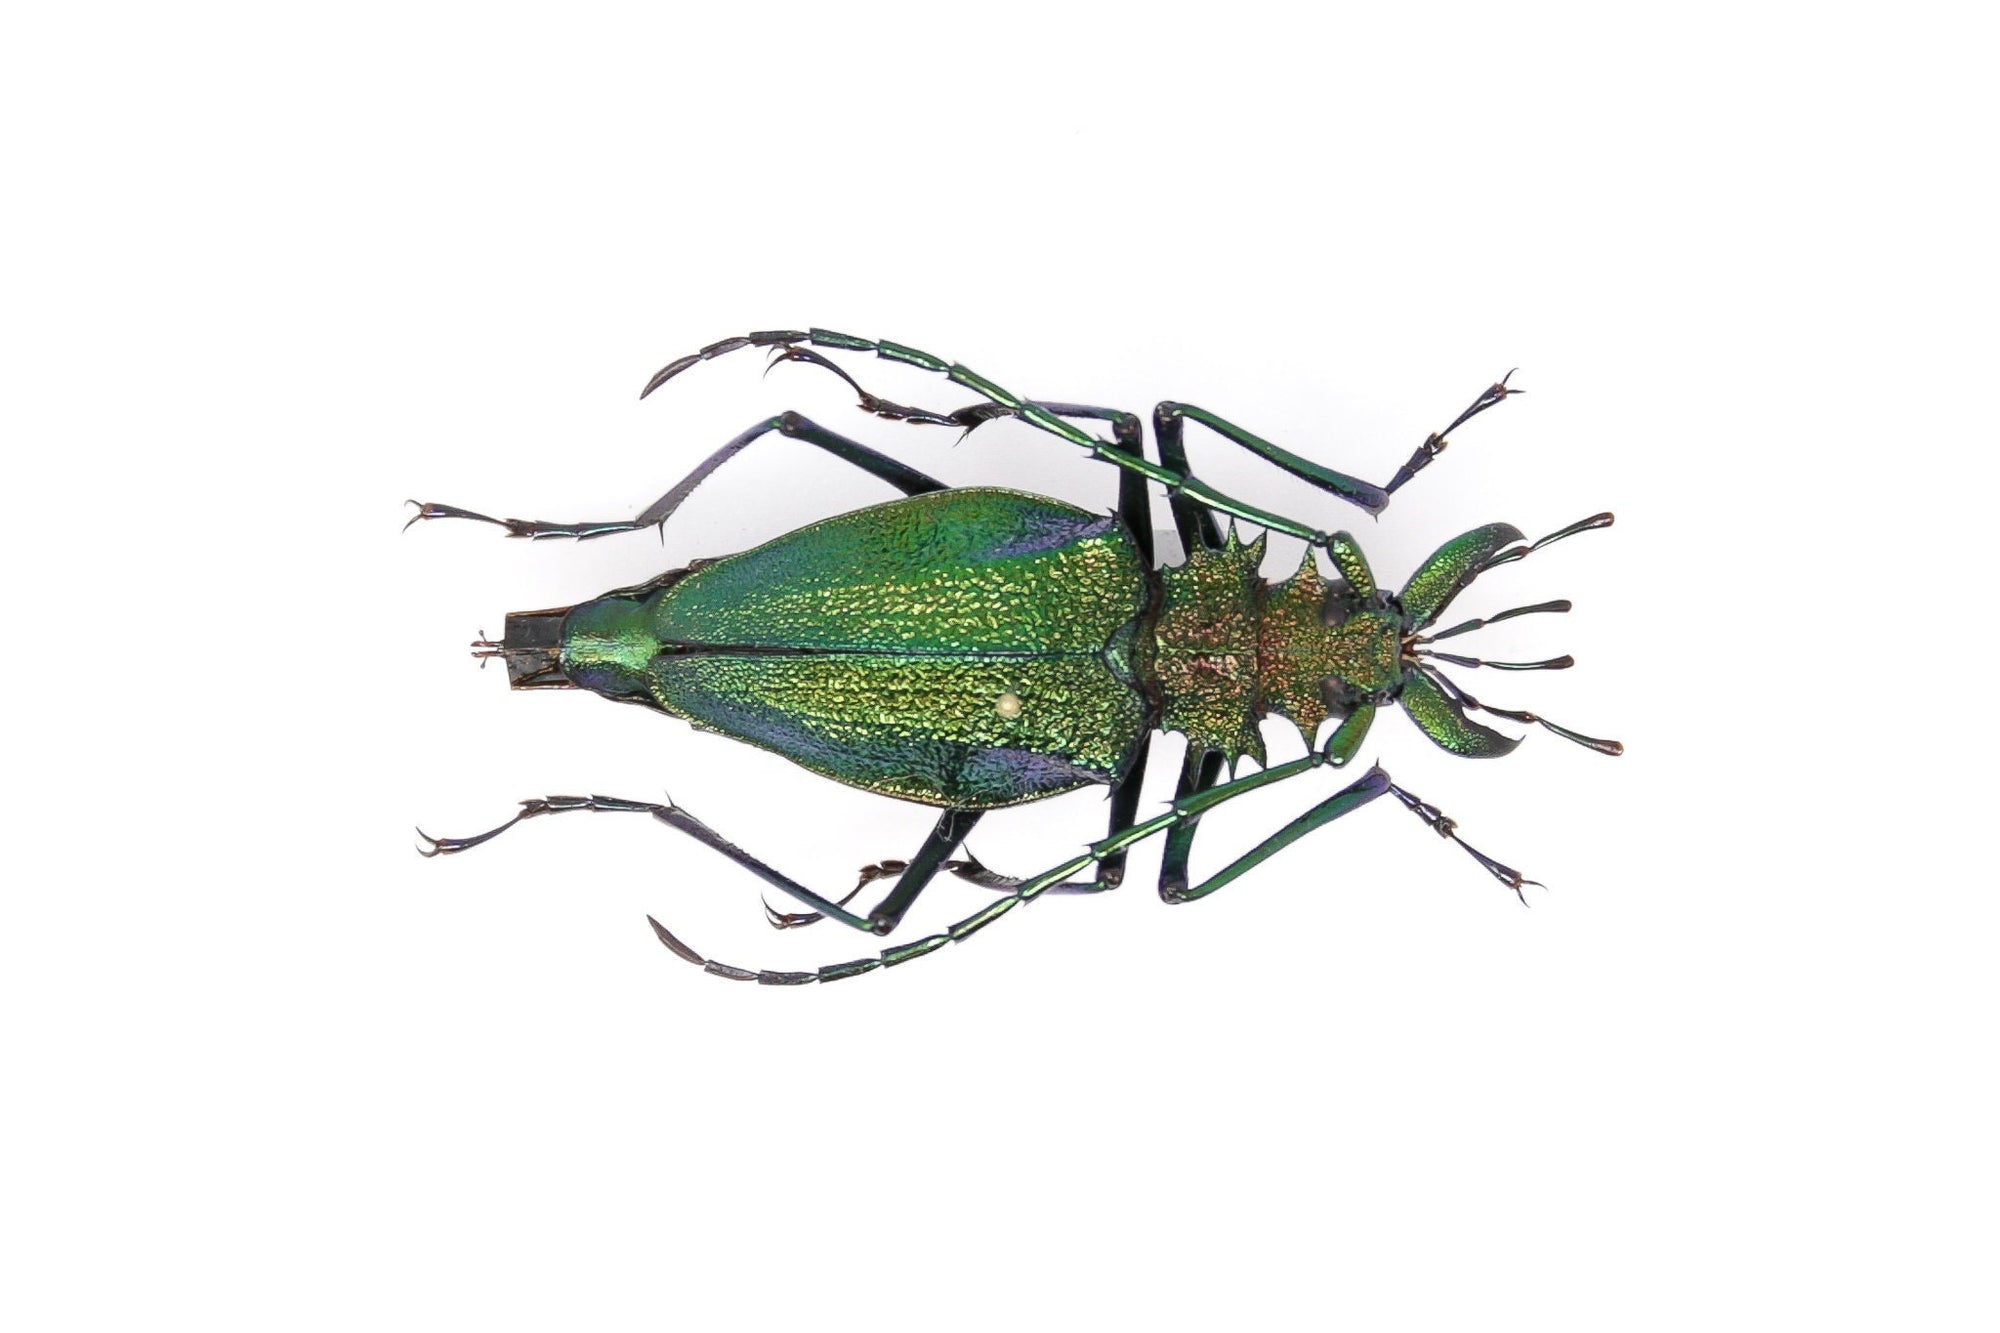 Psalidognathus friendii FEMALE Colombia, A1 Entomology Set Pinned Real Beetle Specimen